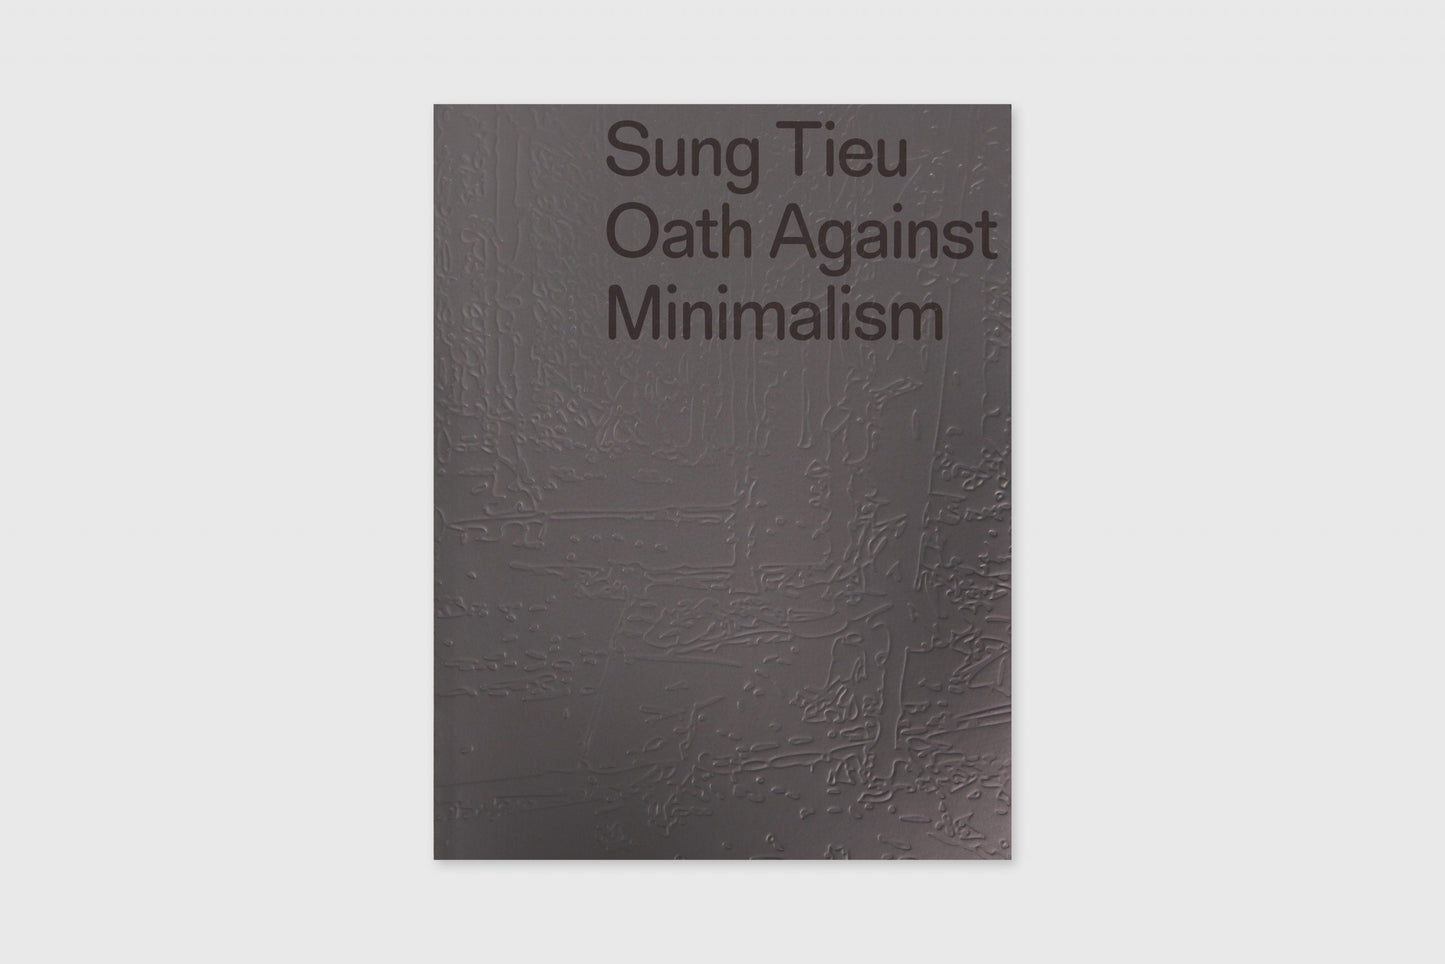 Oath against Minimalism